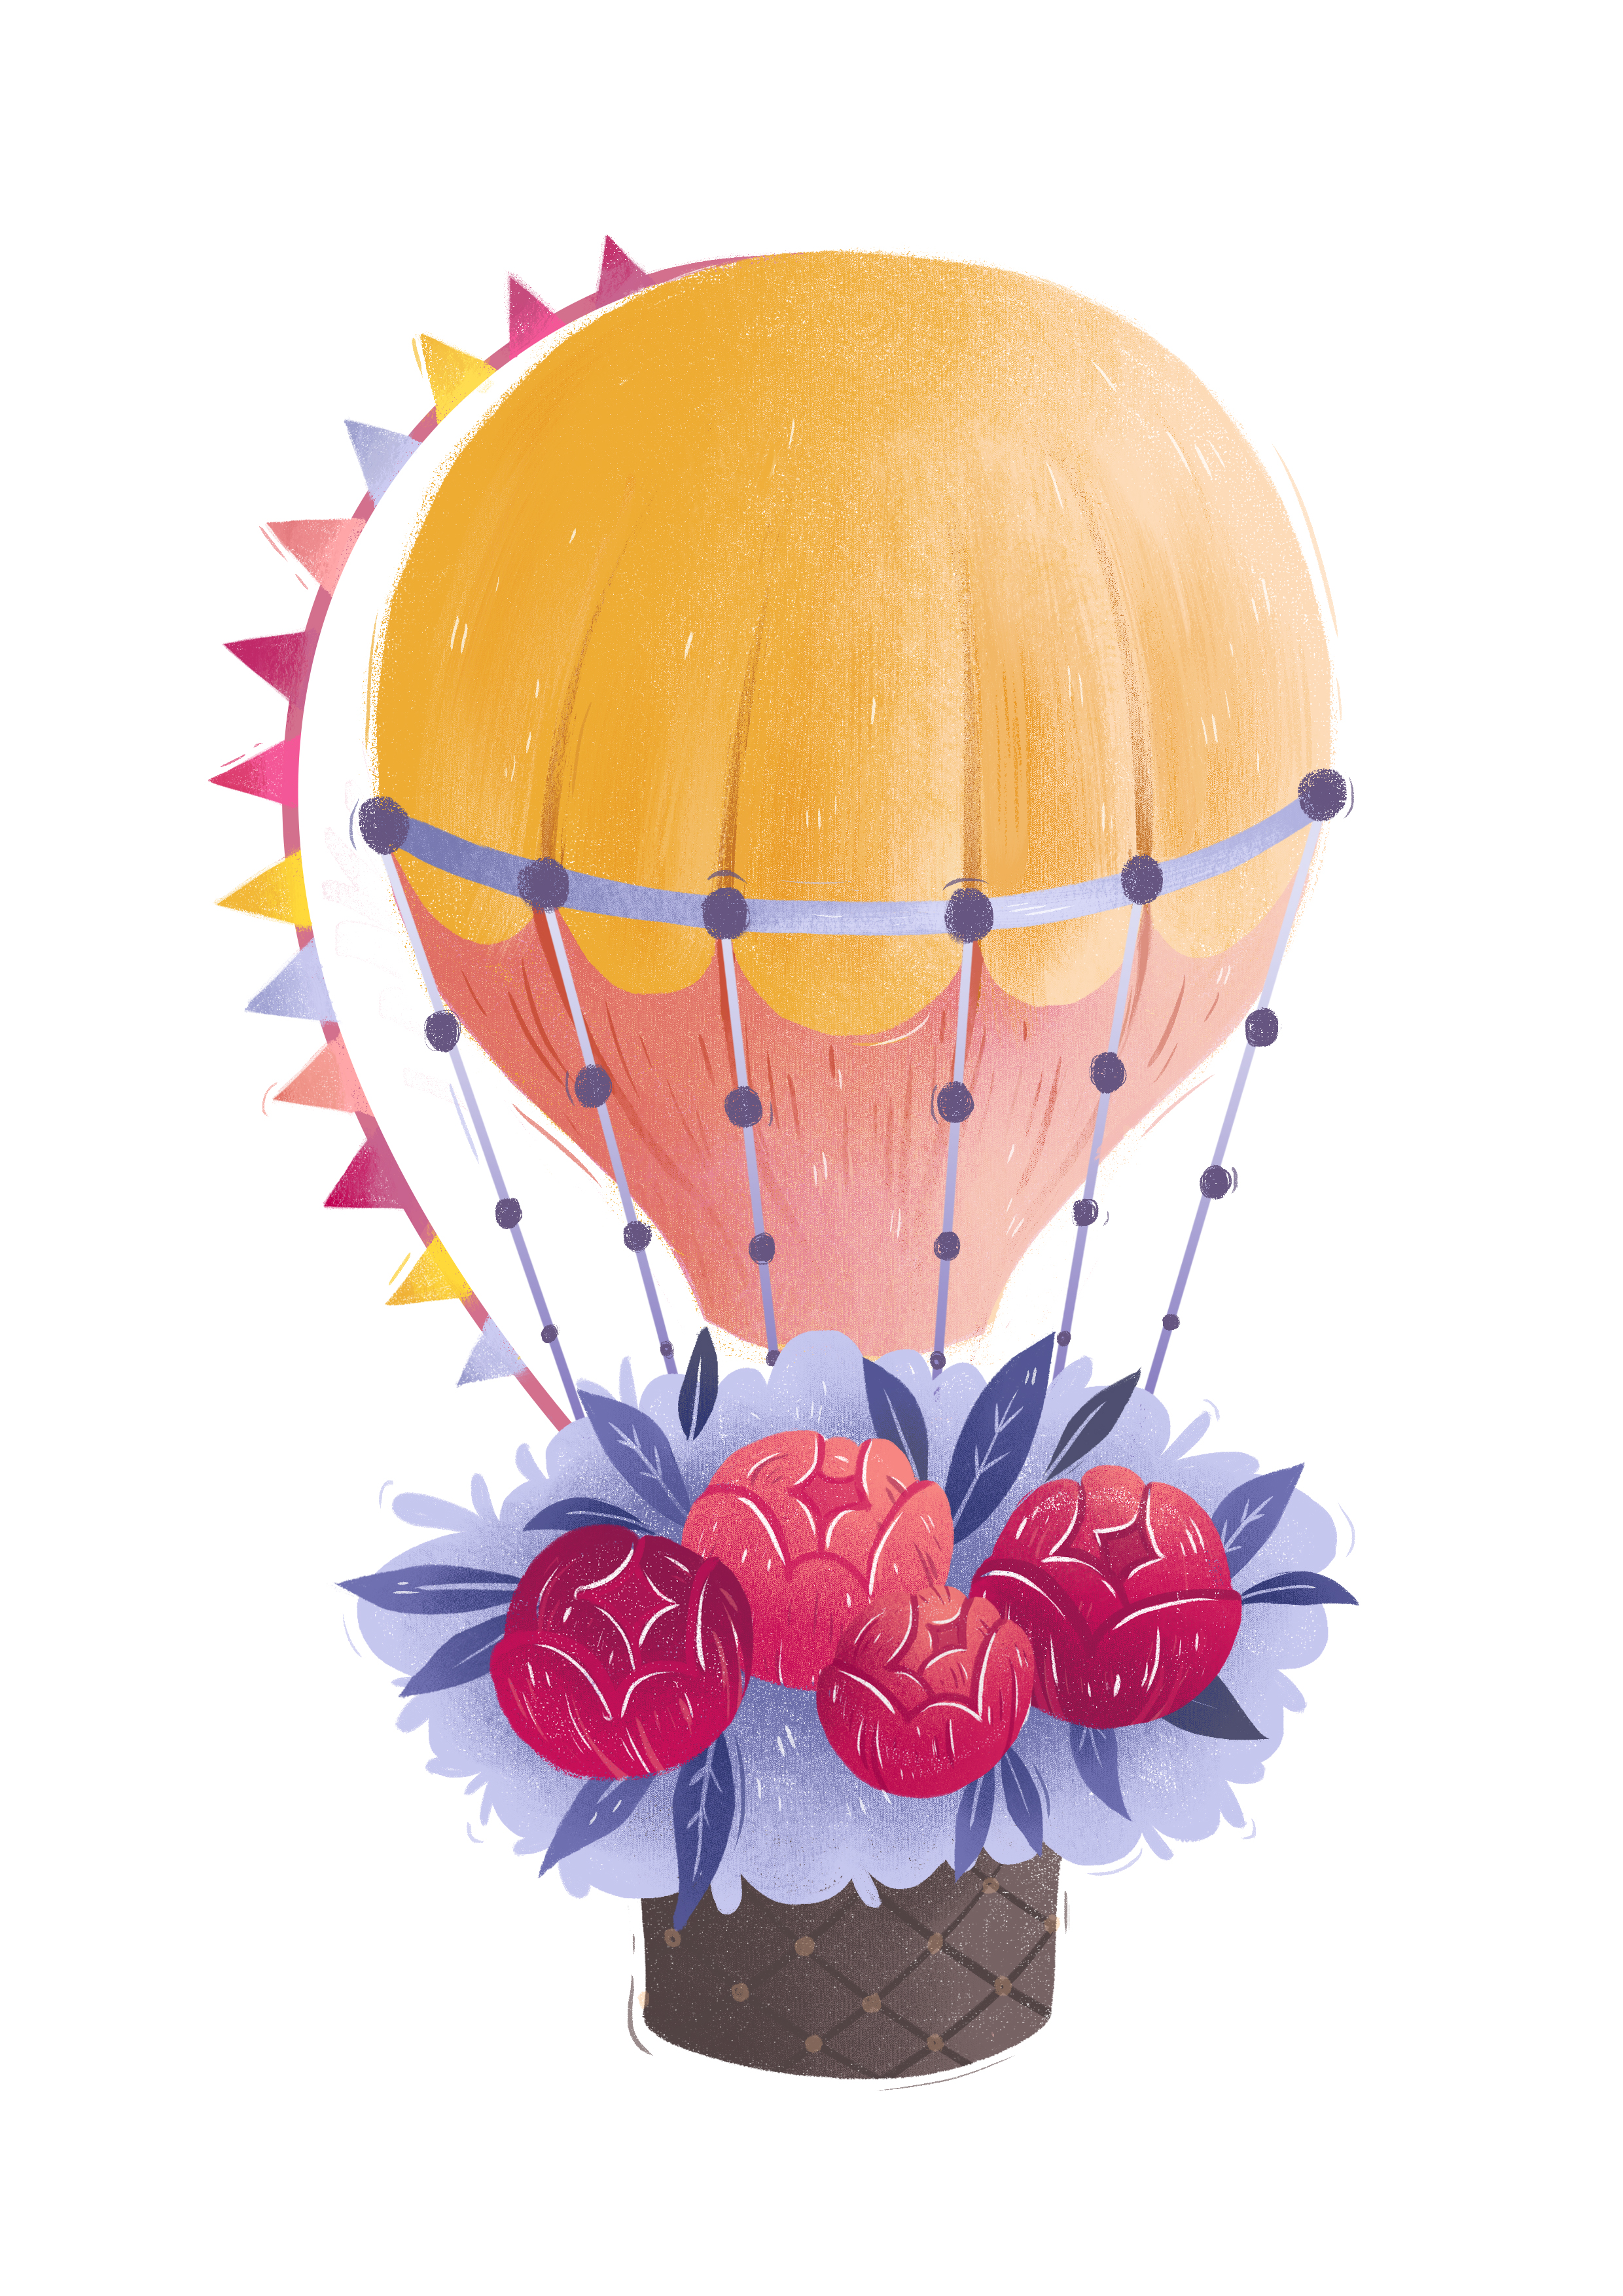 Коротышки воздушный шар. Воздушный шар с корзиной. Корзинка с шариками воздушными. Воздушные шары с корзинкой. Корзинка для воздушного шара.